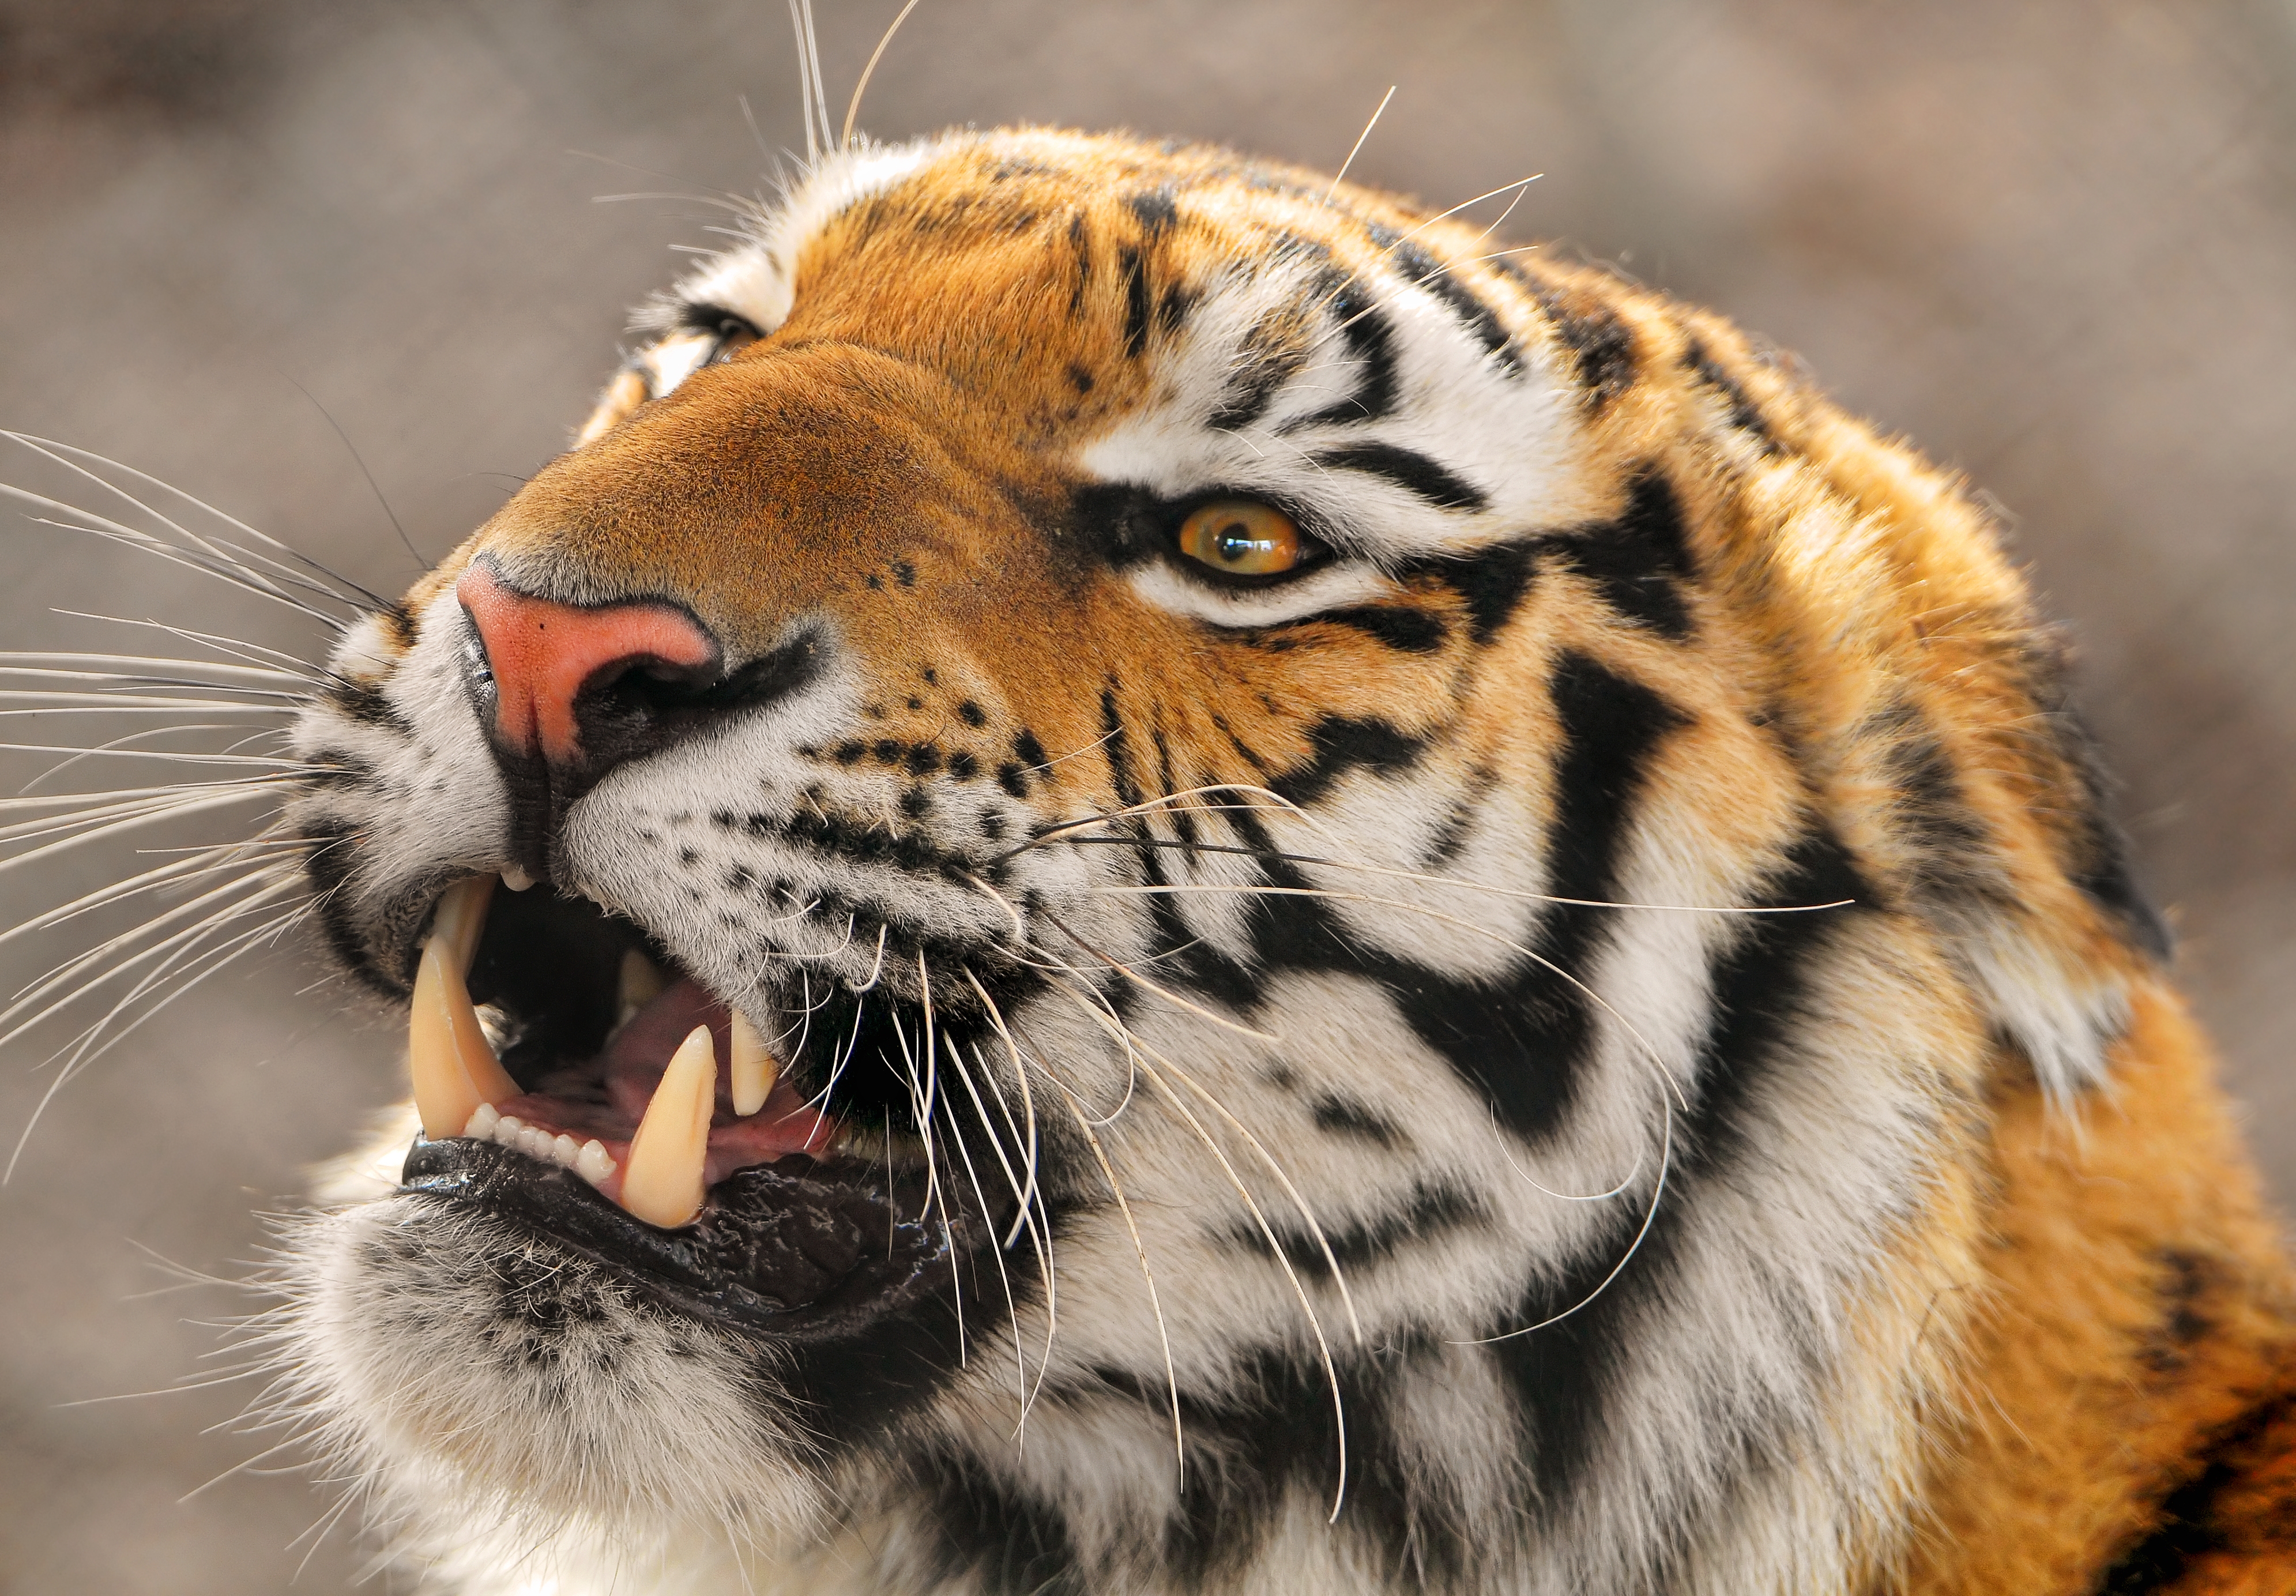 HD wallpaper, Carnivore, Zoo, Siberian Tiger, Young Tigress, Amur Tiger, Predator, Wild Animal, Big Cat